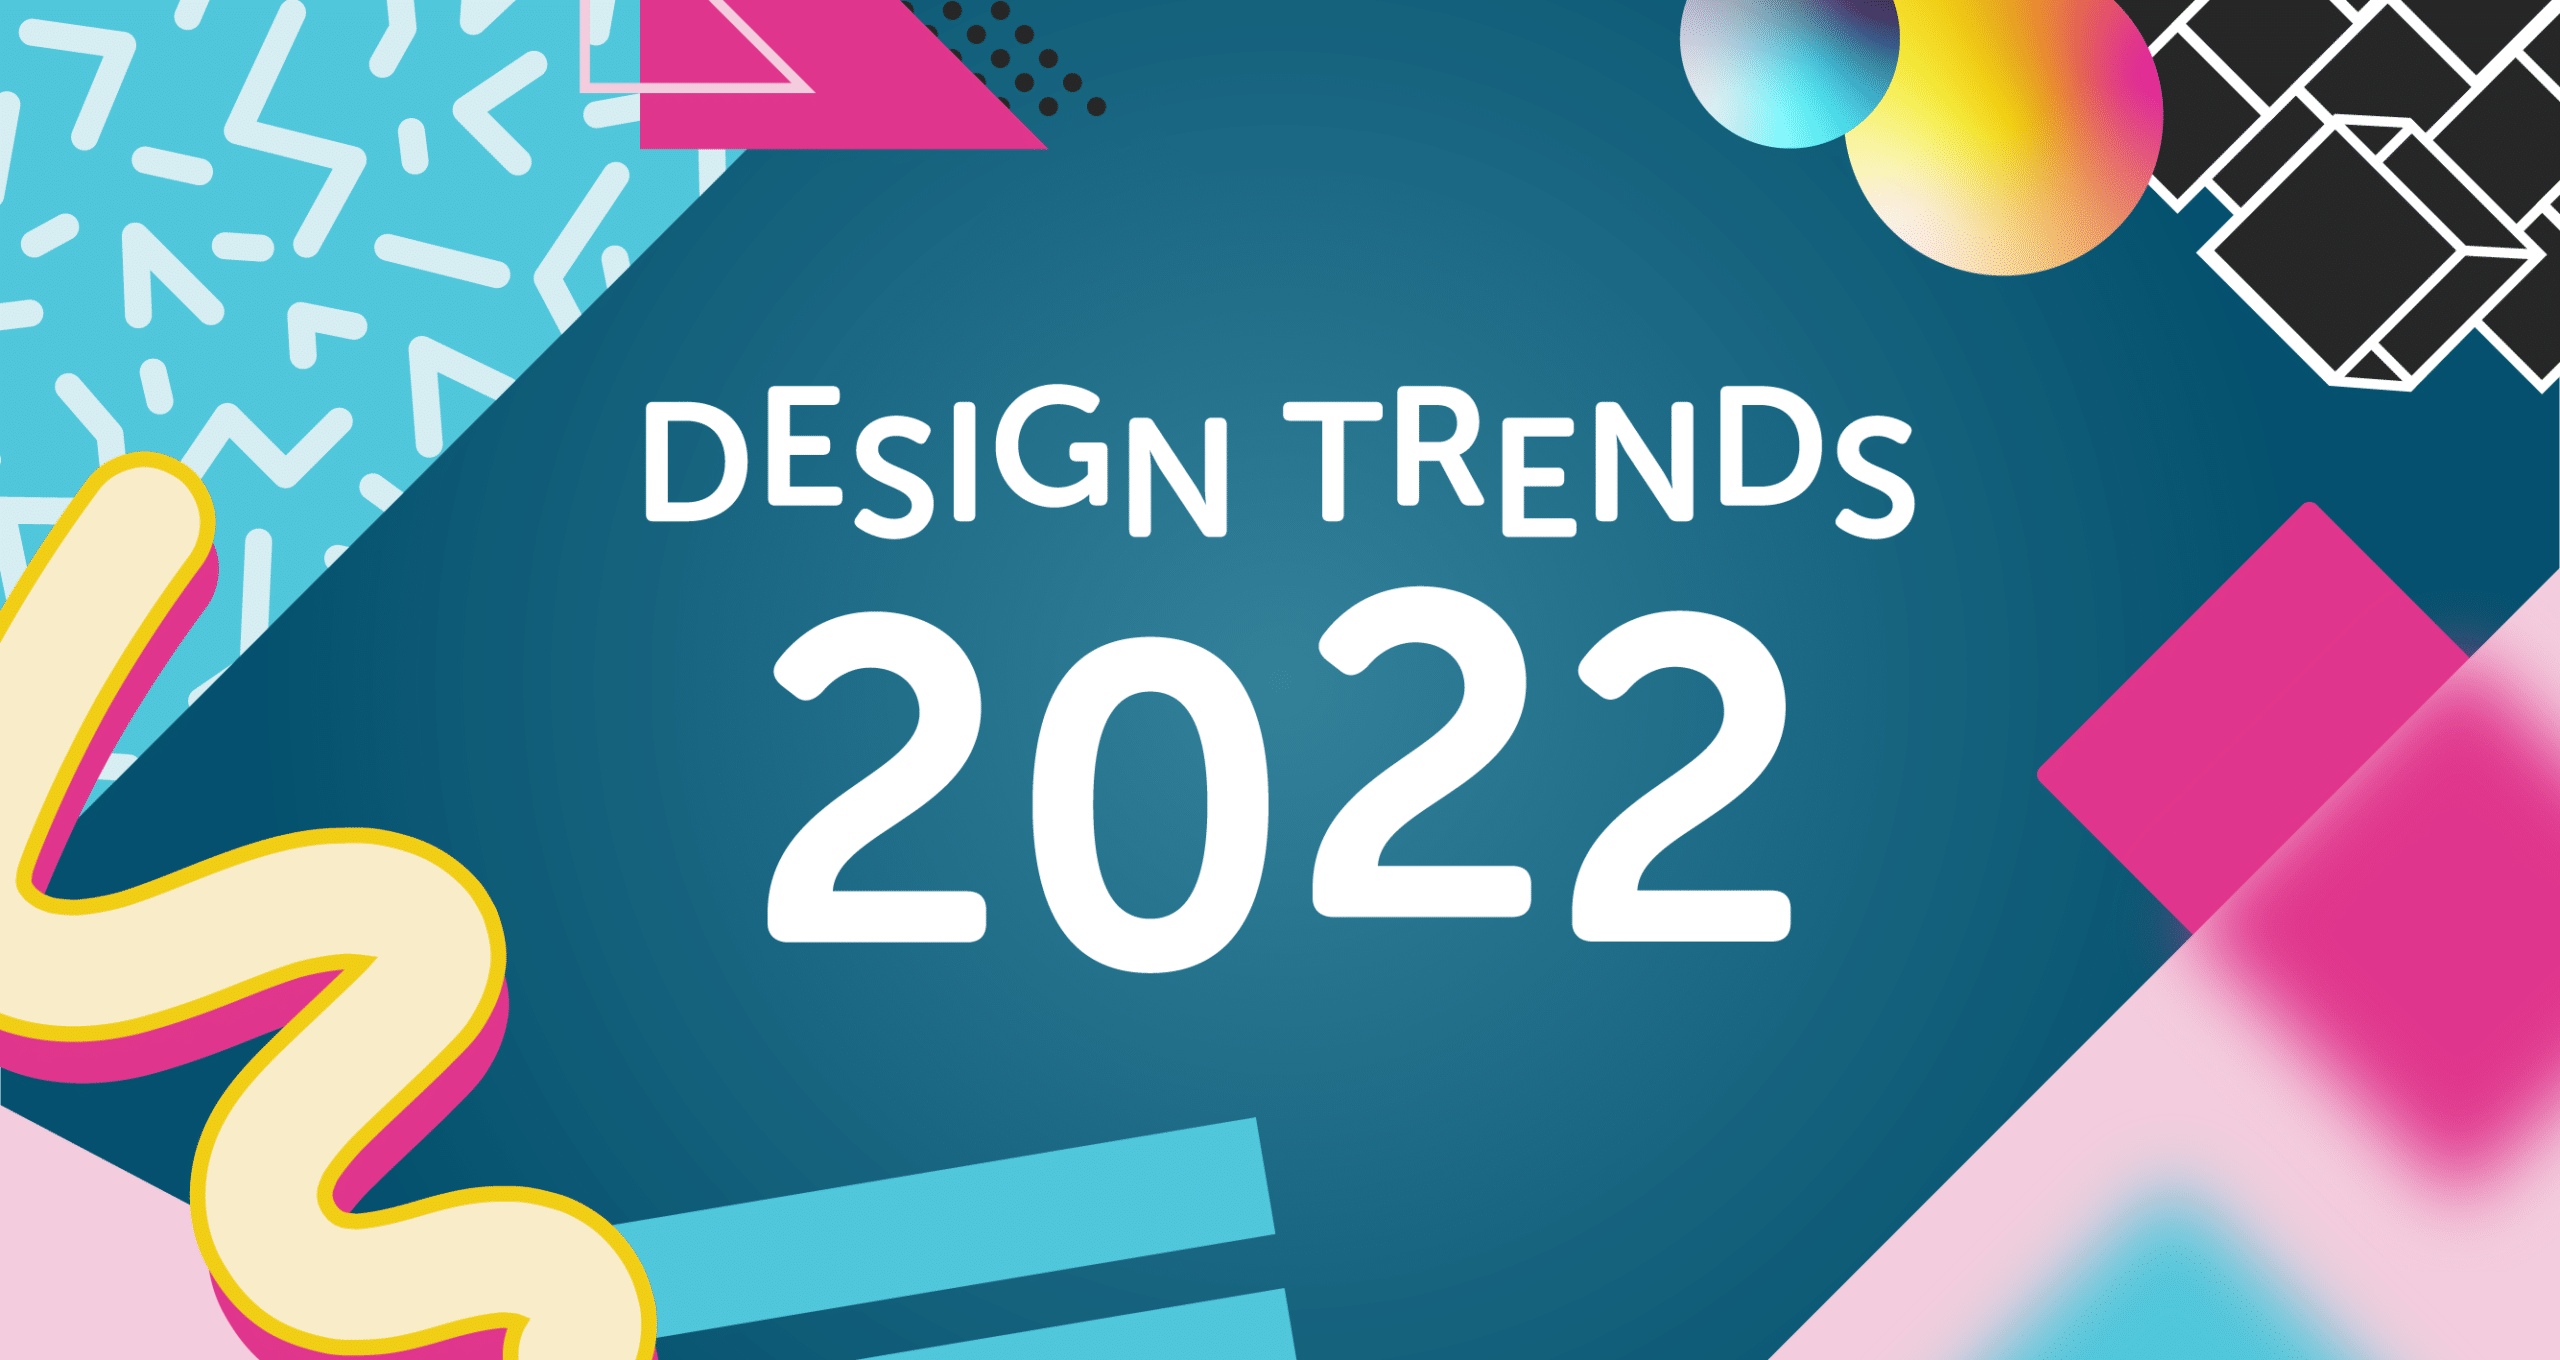 promotional image reads Design Trends 2022